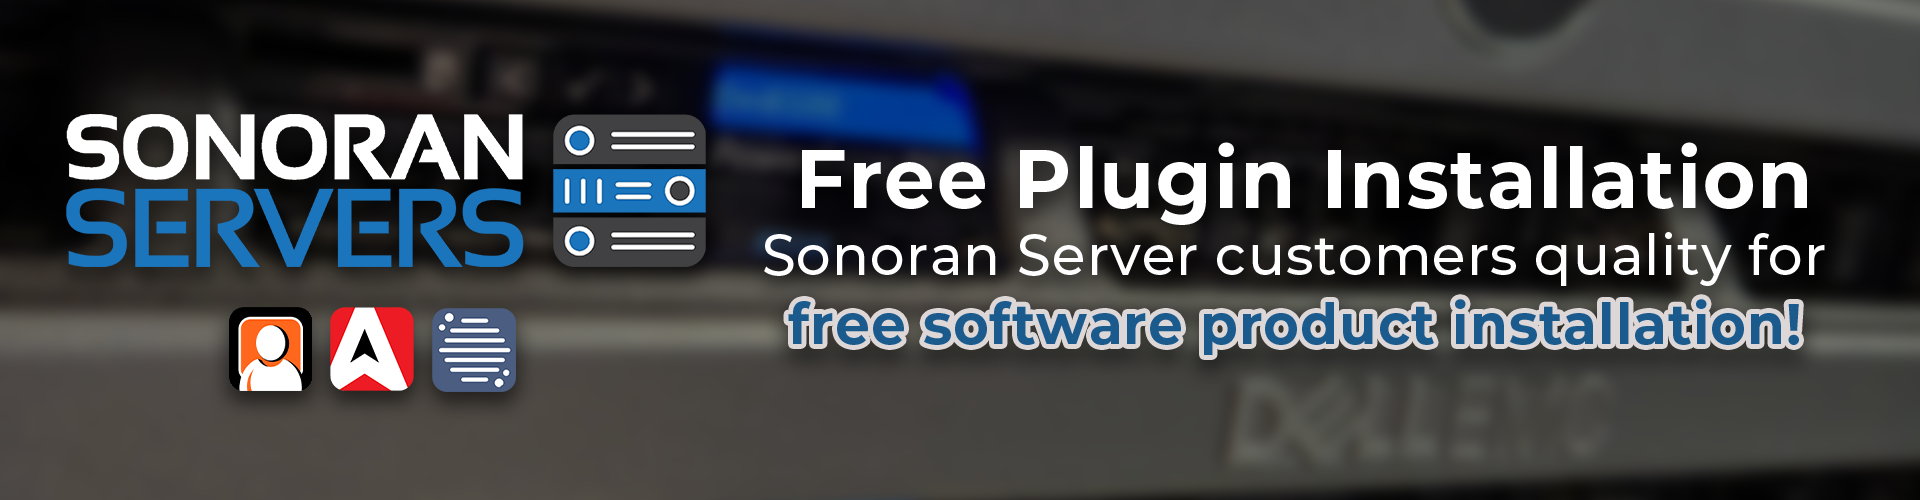 Free Sonoran CAD/CMS/Radio Plugin installation with Windows Server Subscription!